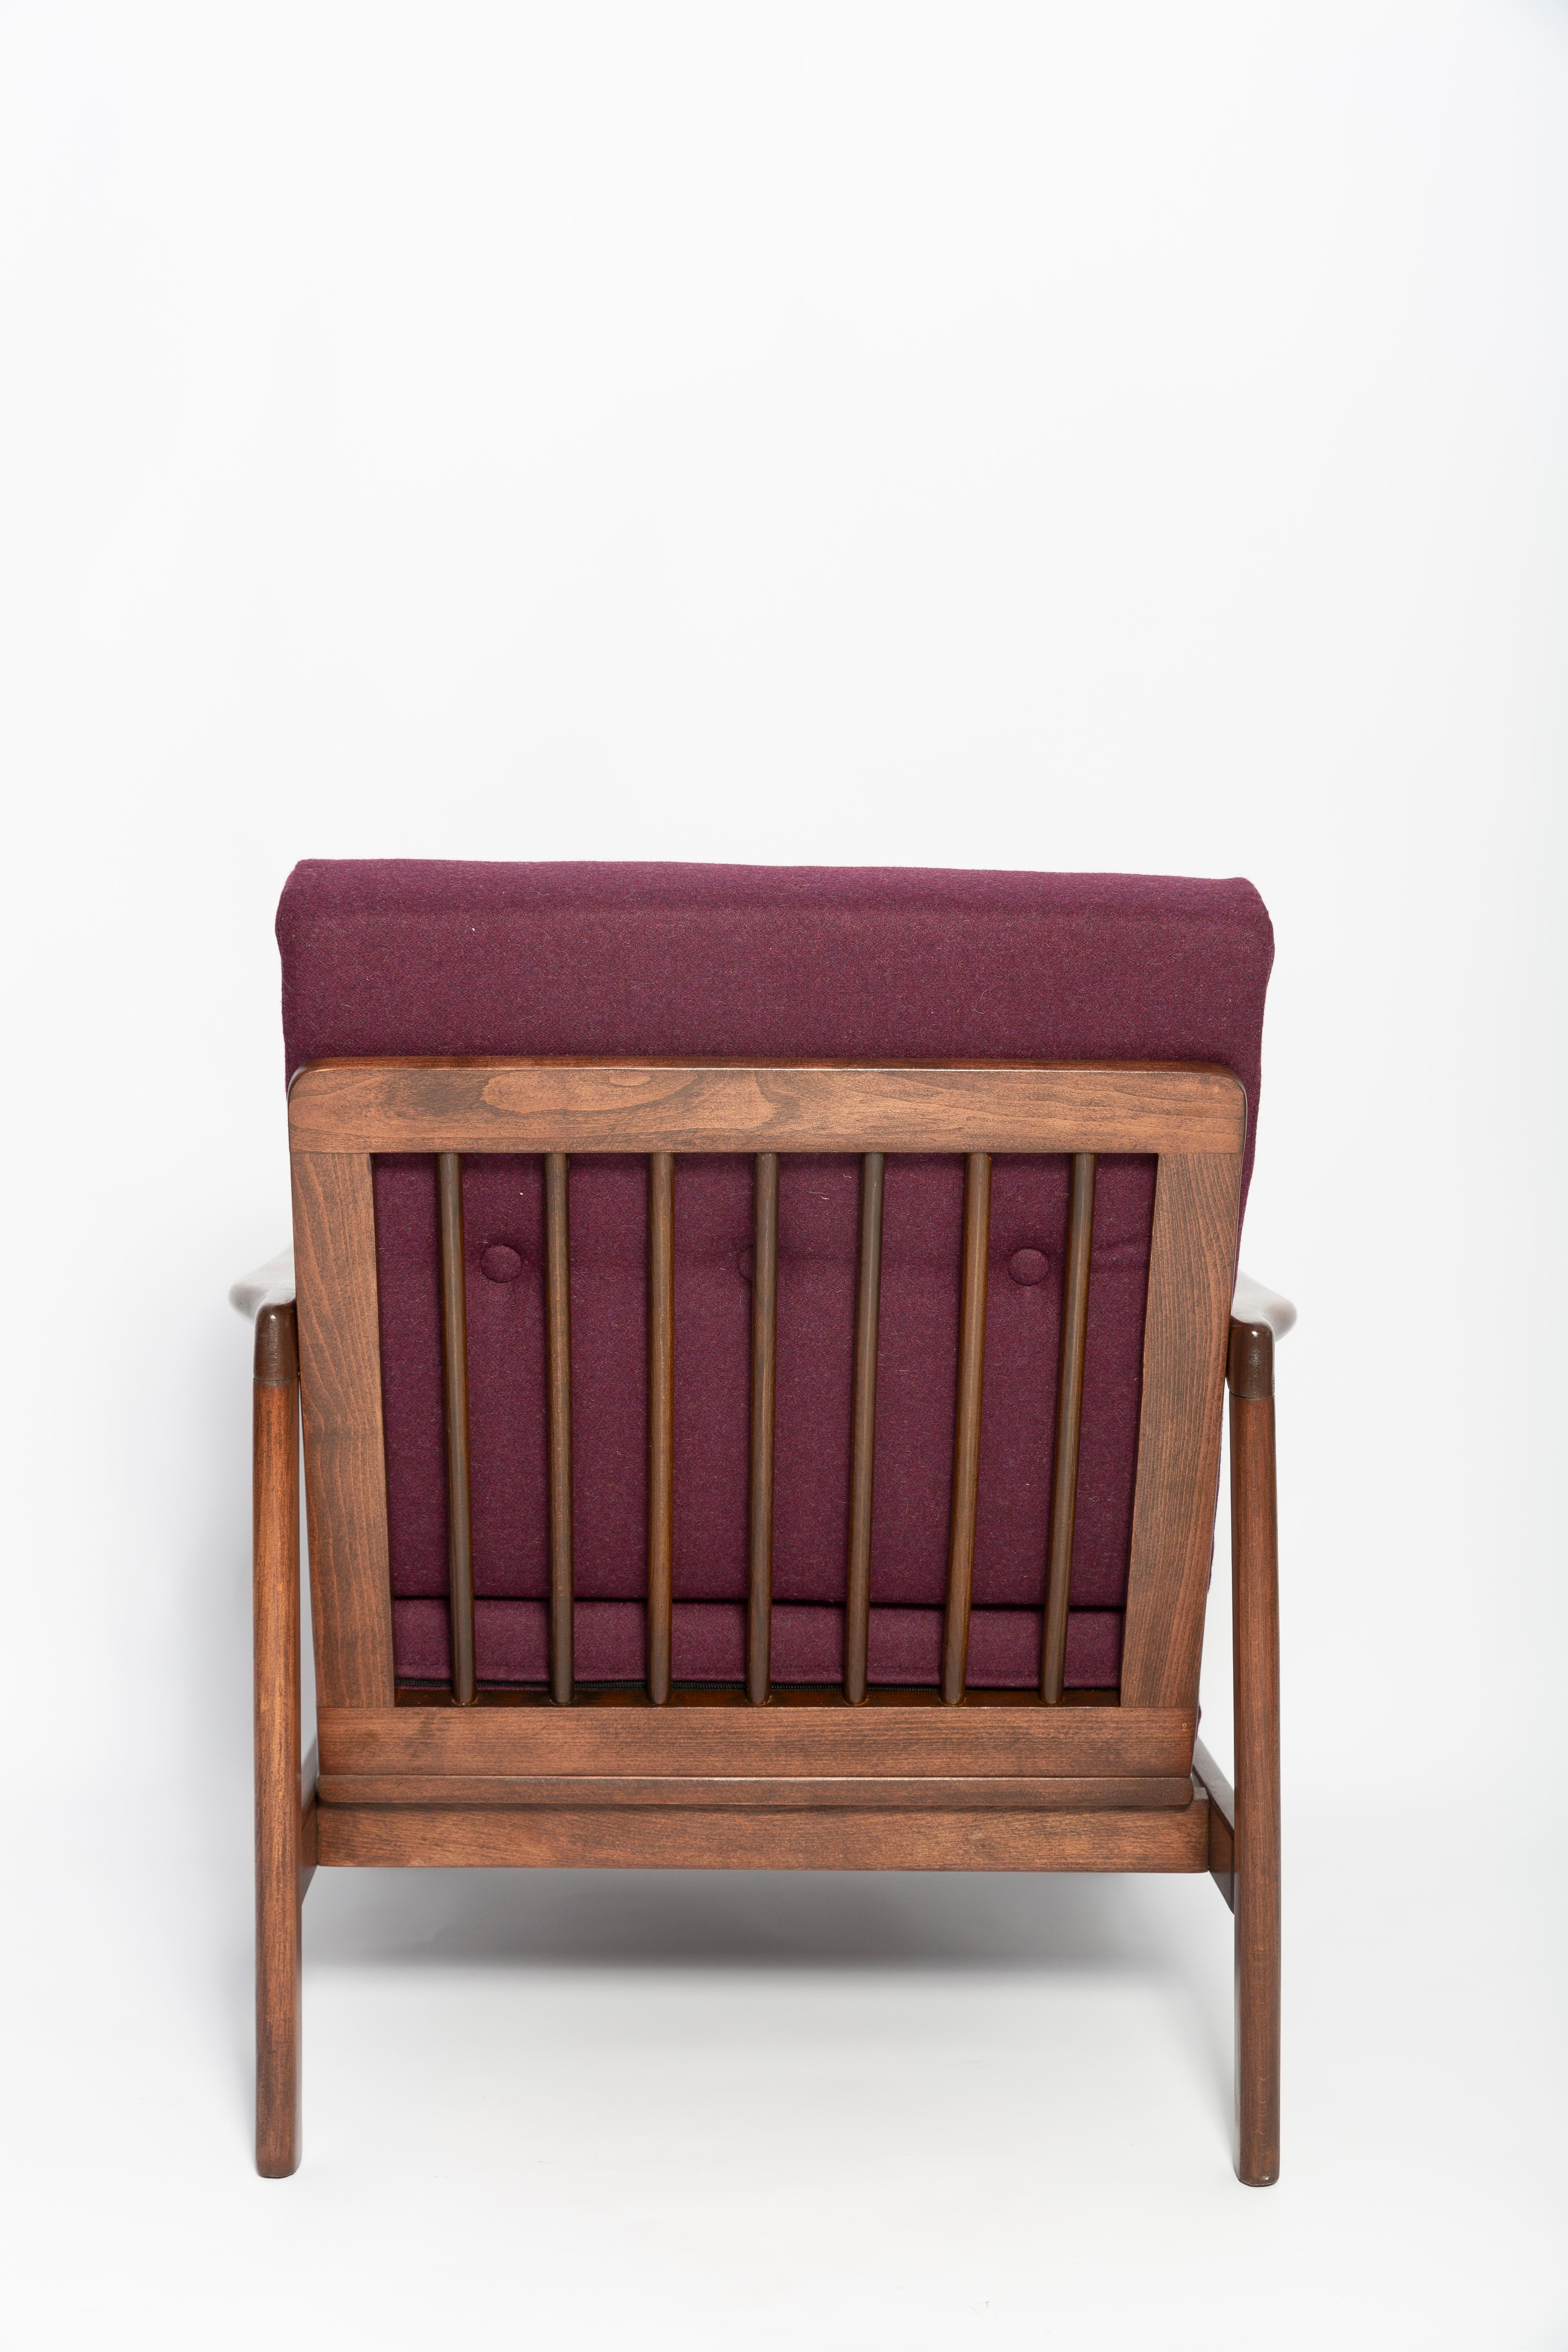 Pair of Mid Century Purple Wool Velvet Armchairs, Zenon Baczyk, Poland, 1960s For Sale 4